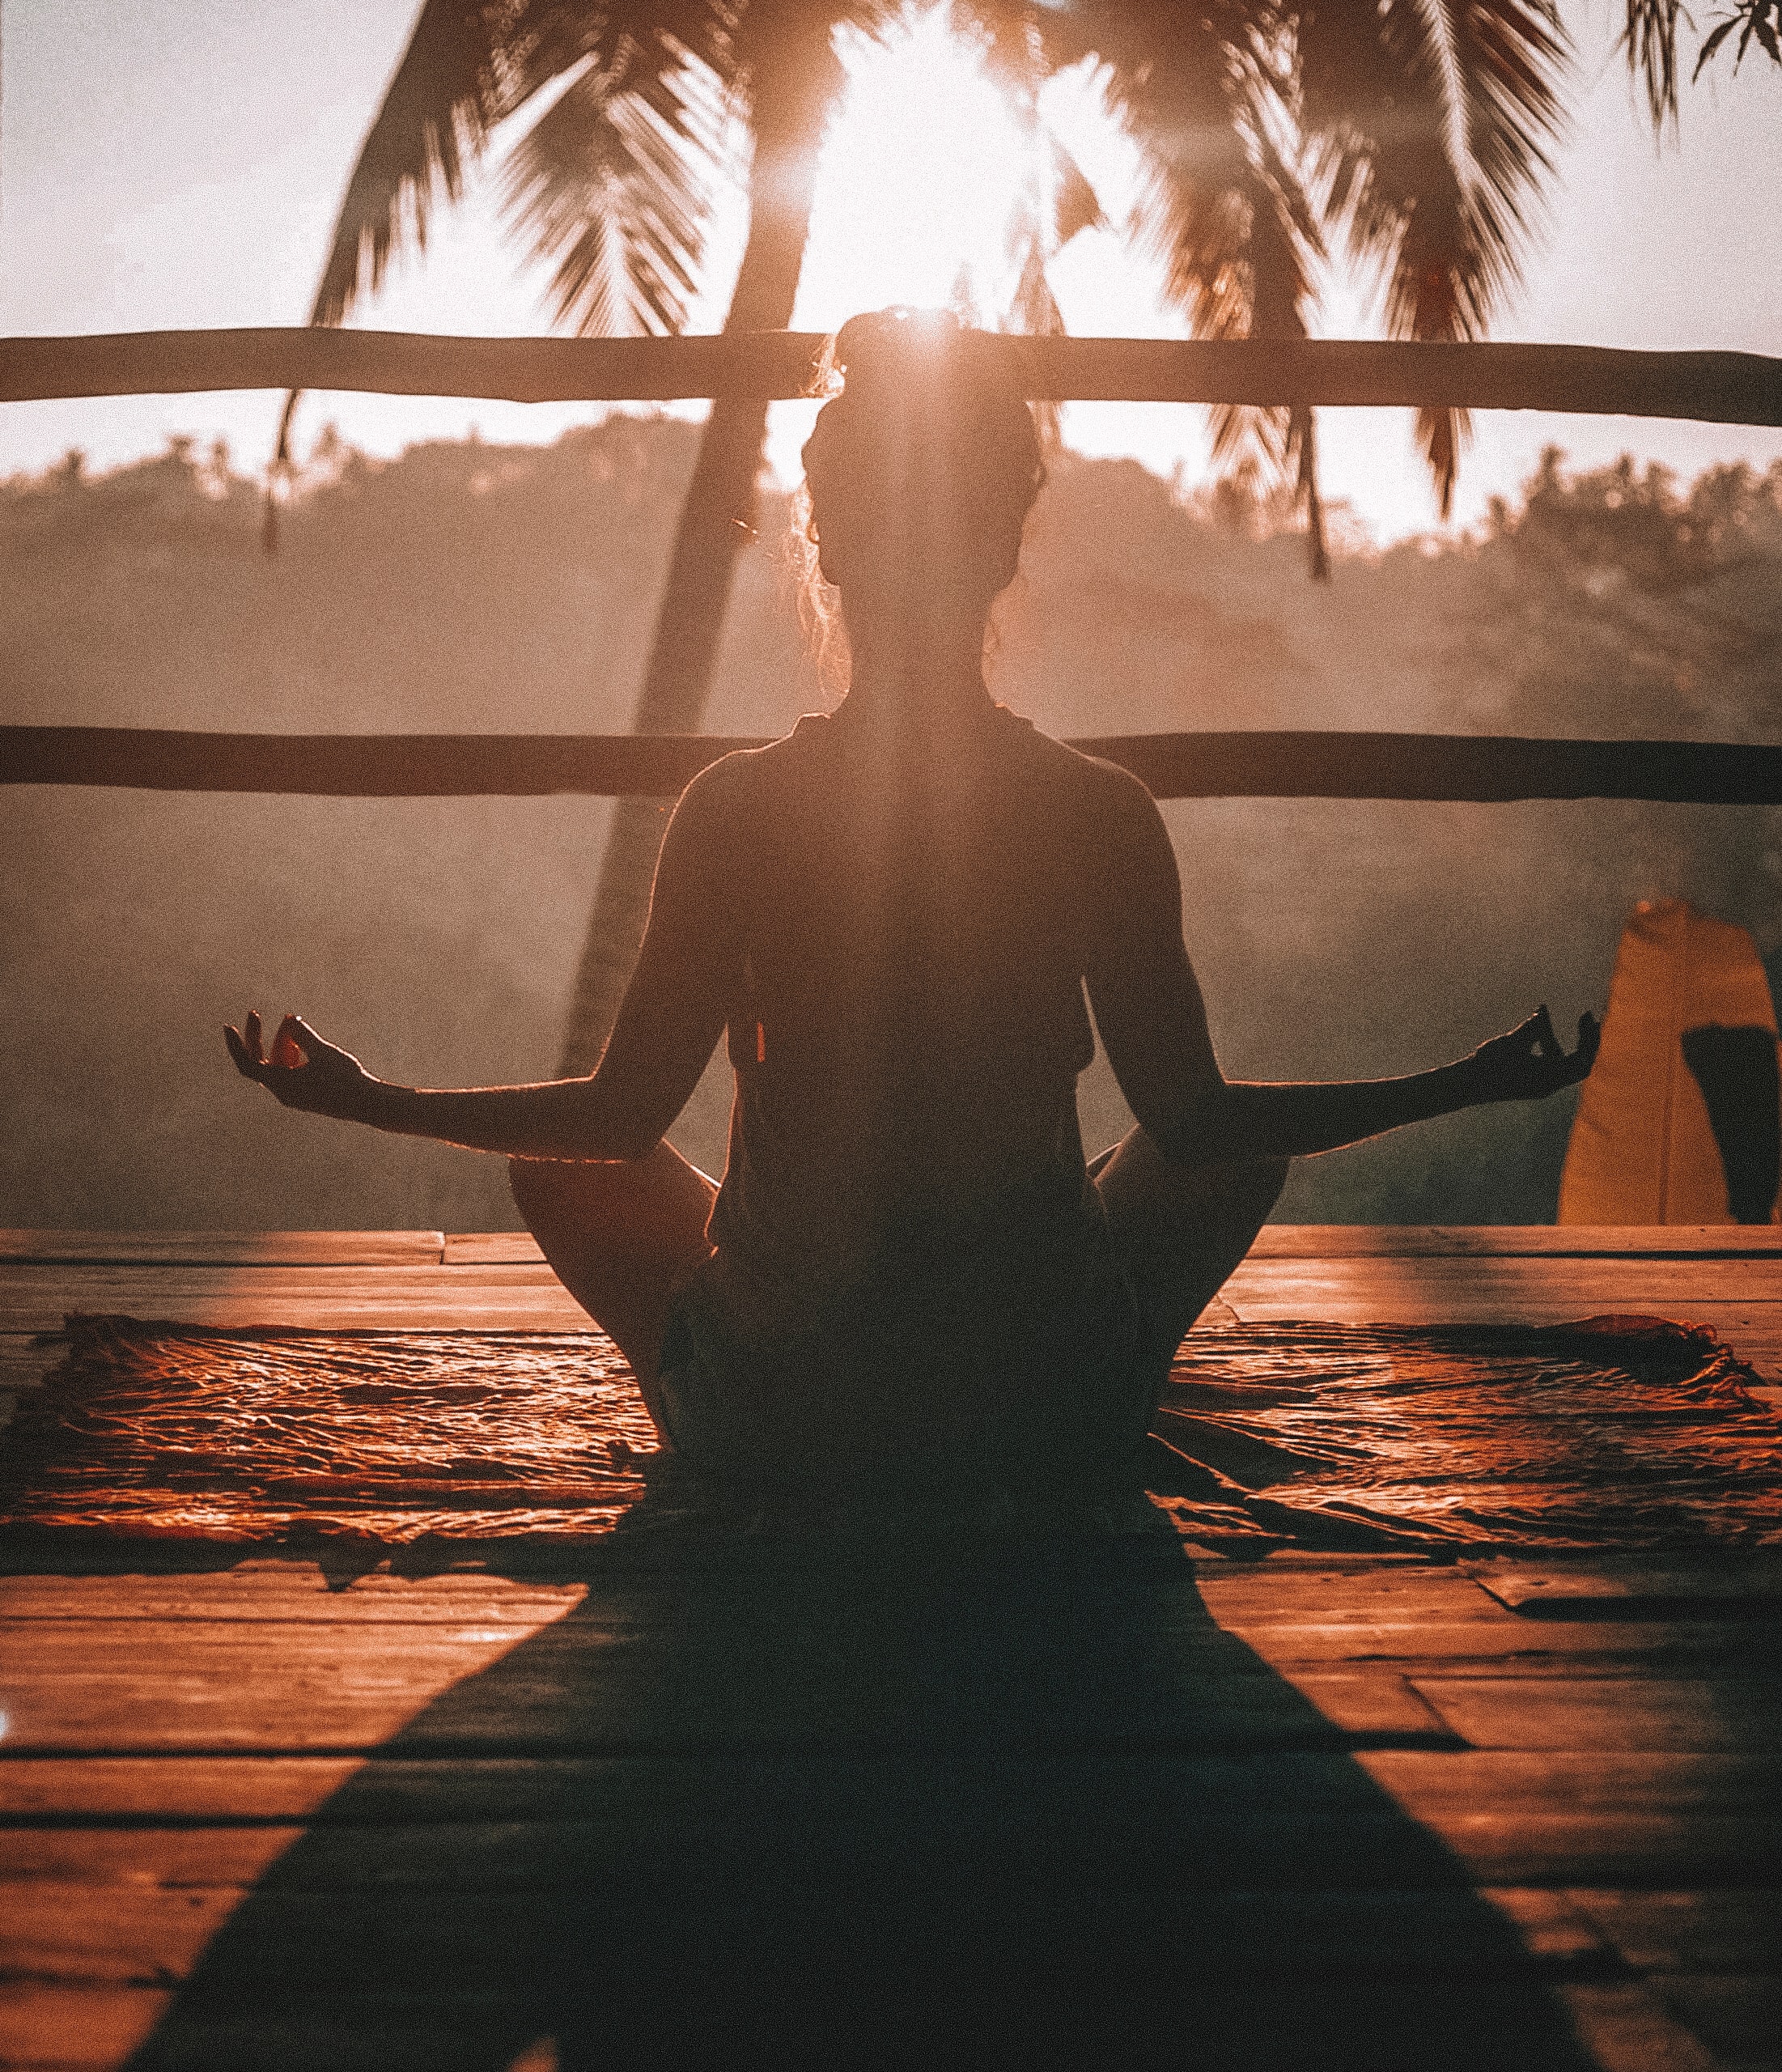 Mindfulness and meditation apps